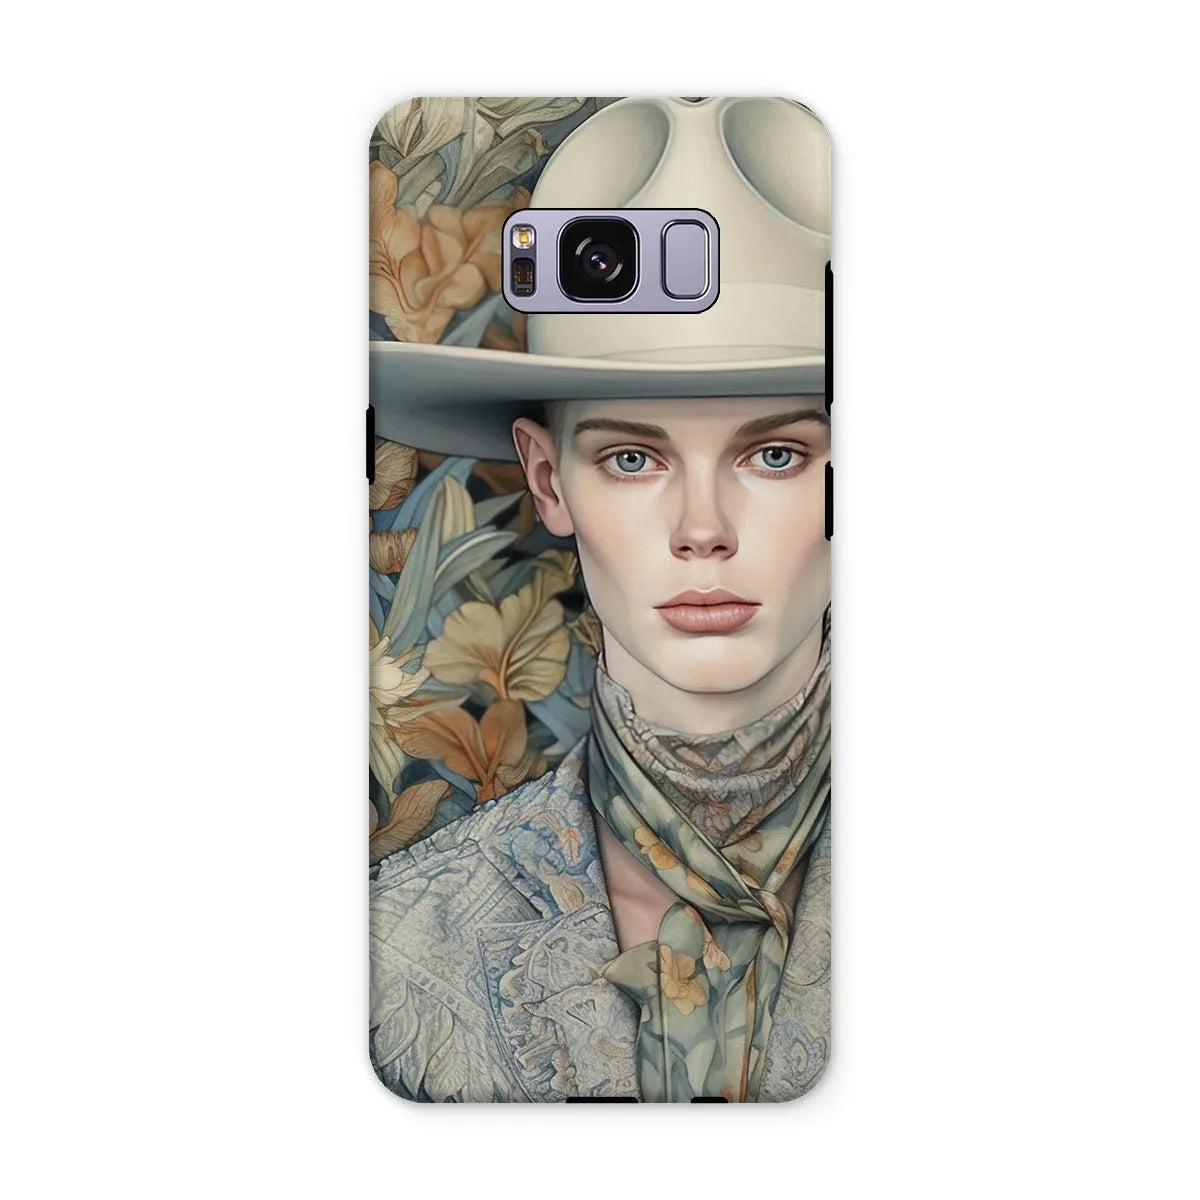 Jasper The Gay Cowboy - Dandy Gay Aesthetic Art Phone Case - Samsung Galaxy S8 Plus / Matte - Mobile Phone Cases